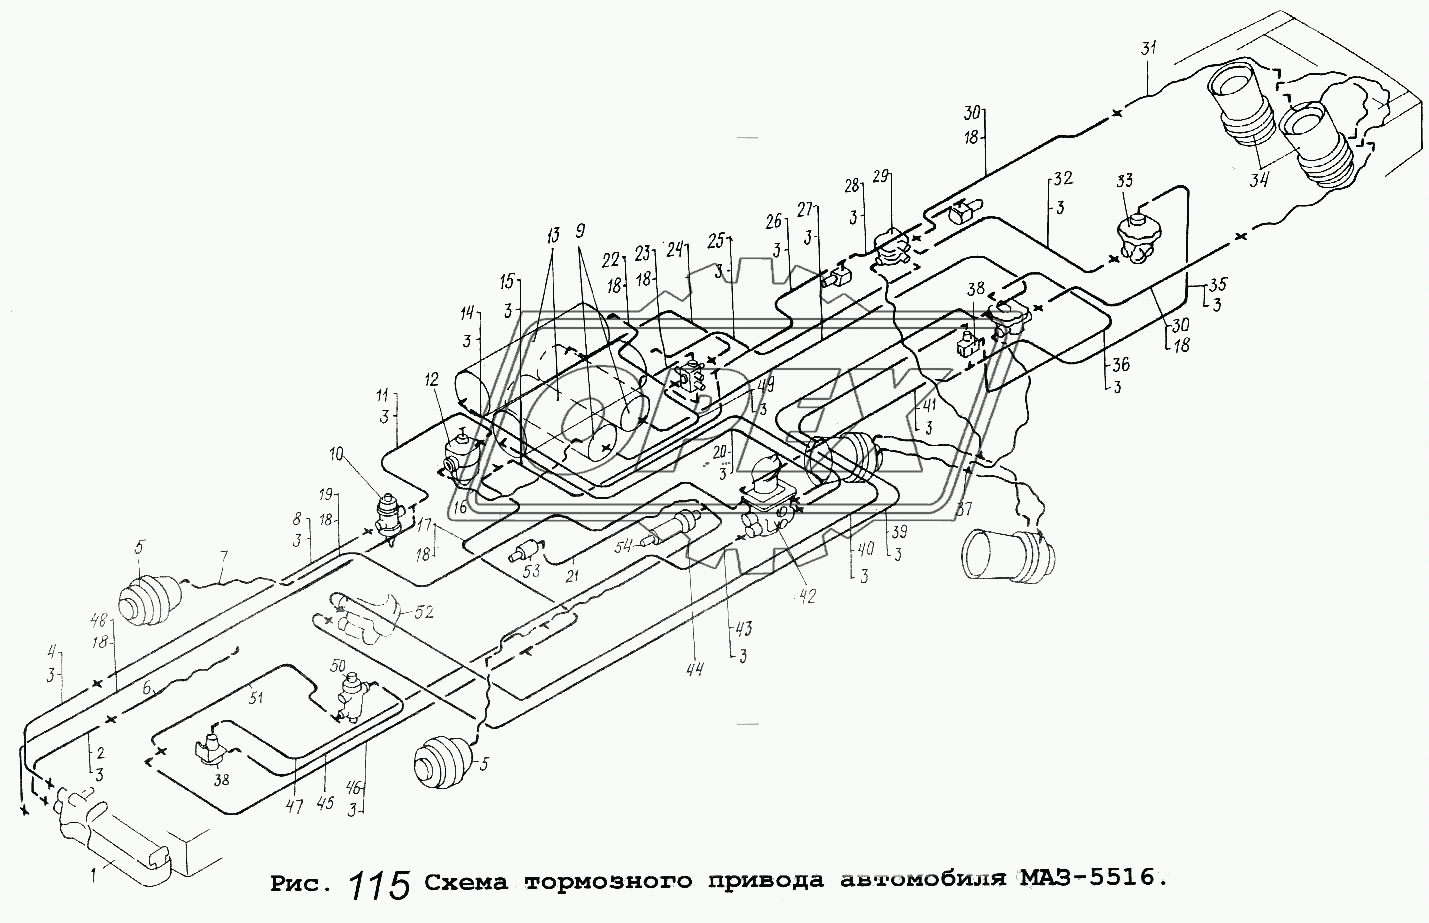 Схема тормозного привода автомобиля МАЗ-5516